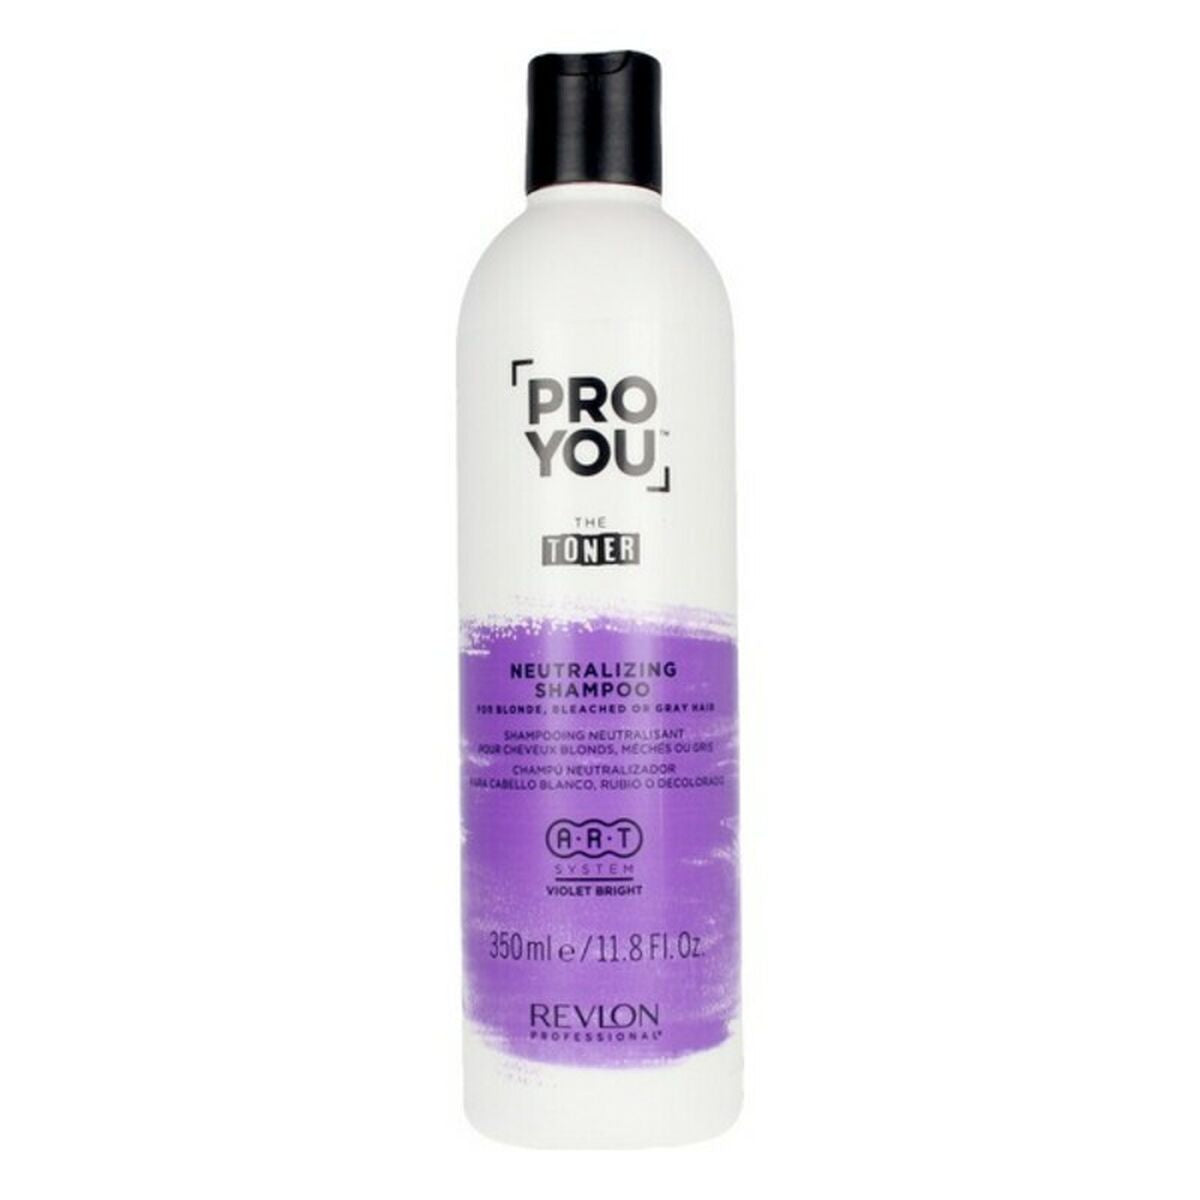 Shampoo Proyou der Toner Revlon (350 ml)